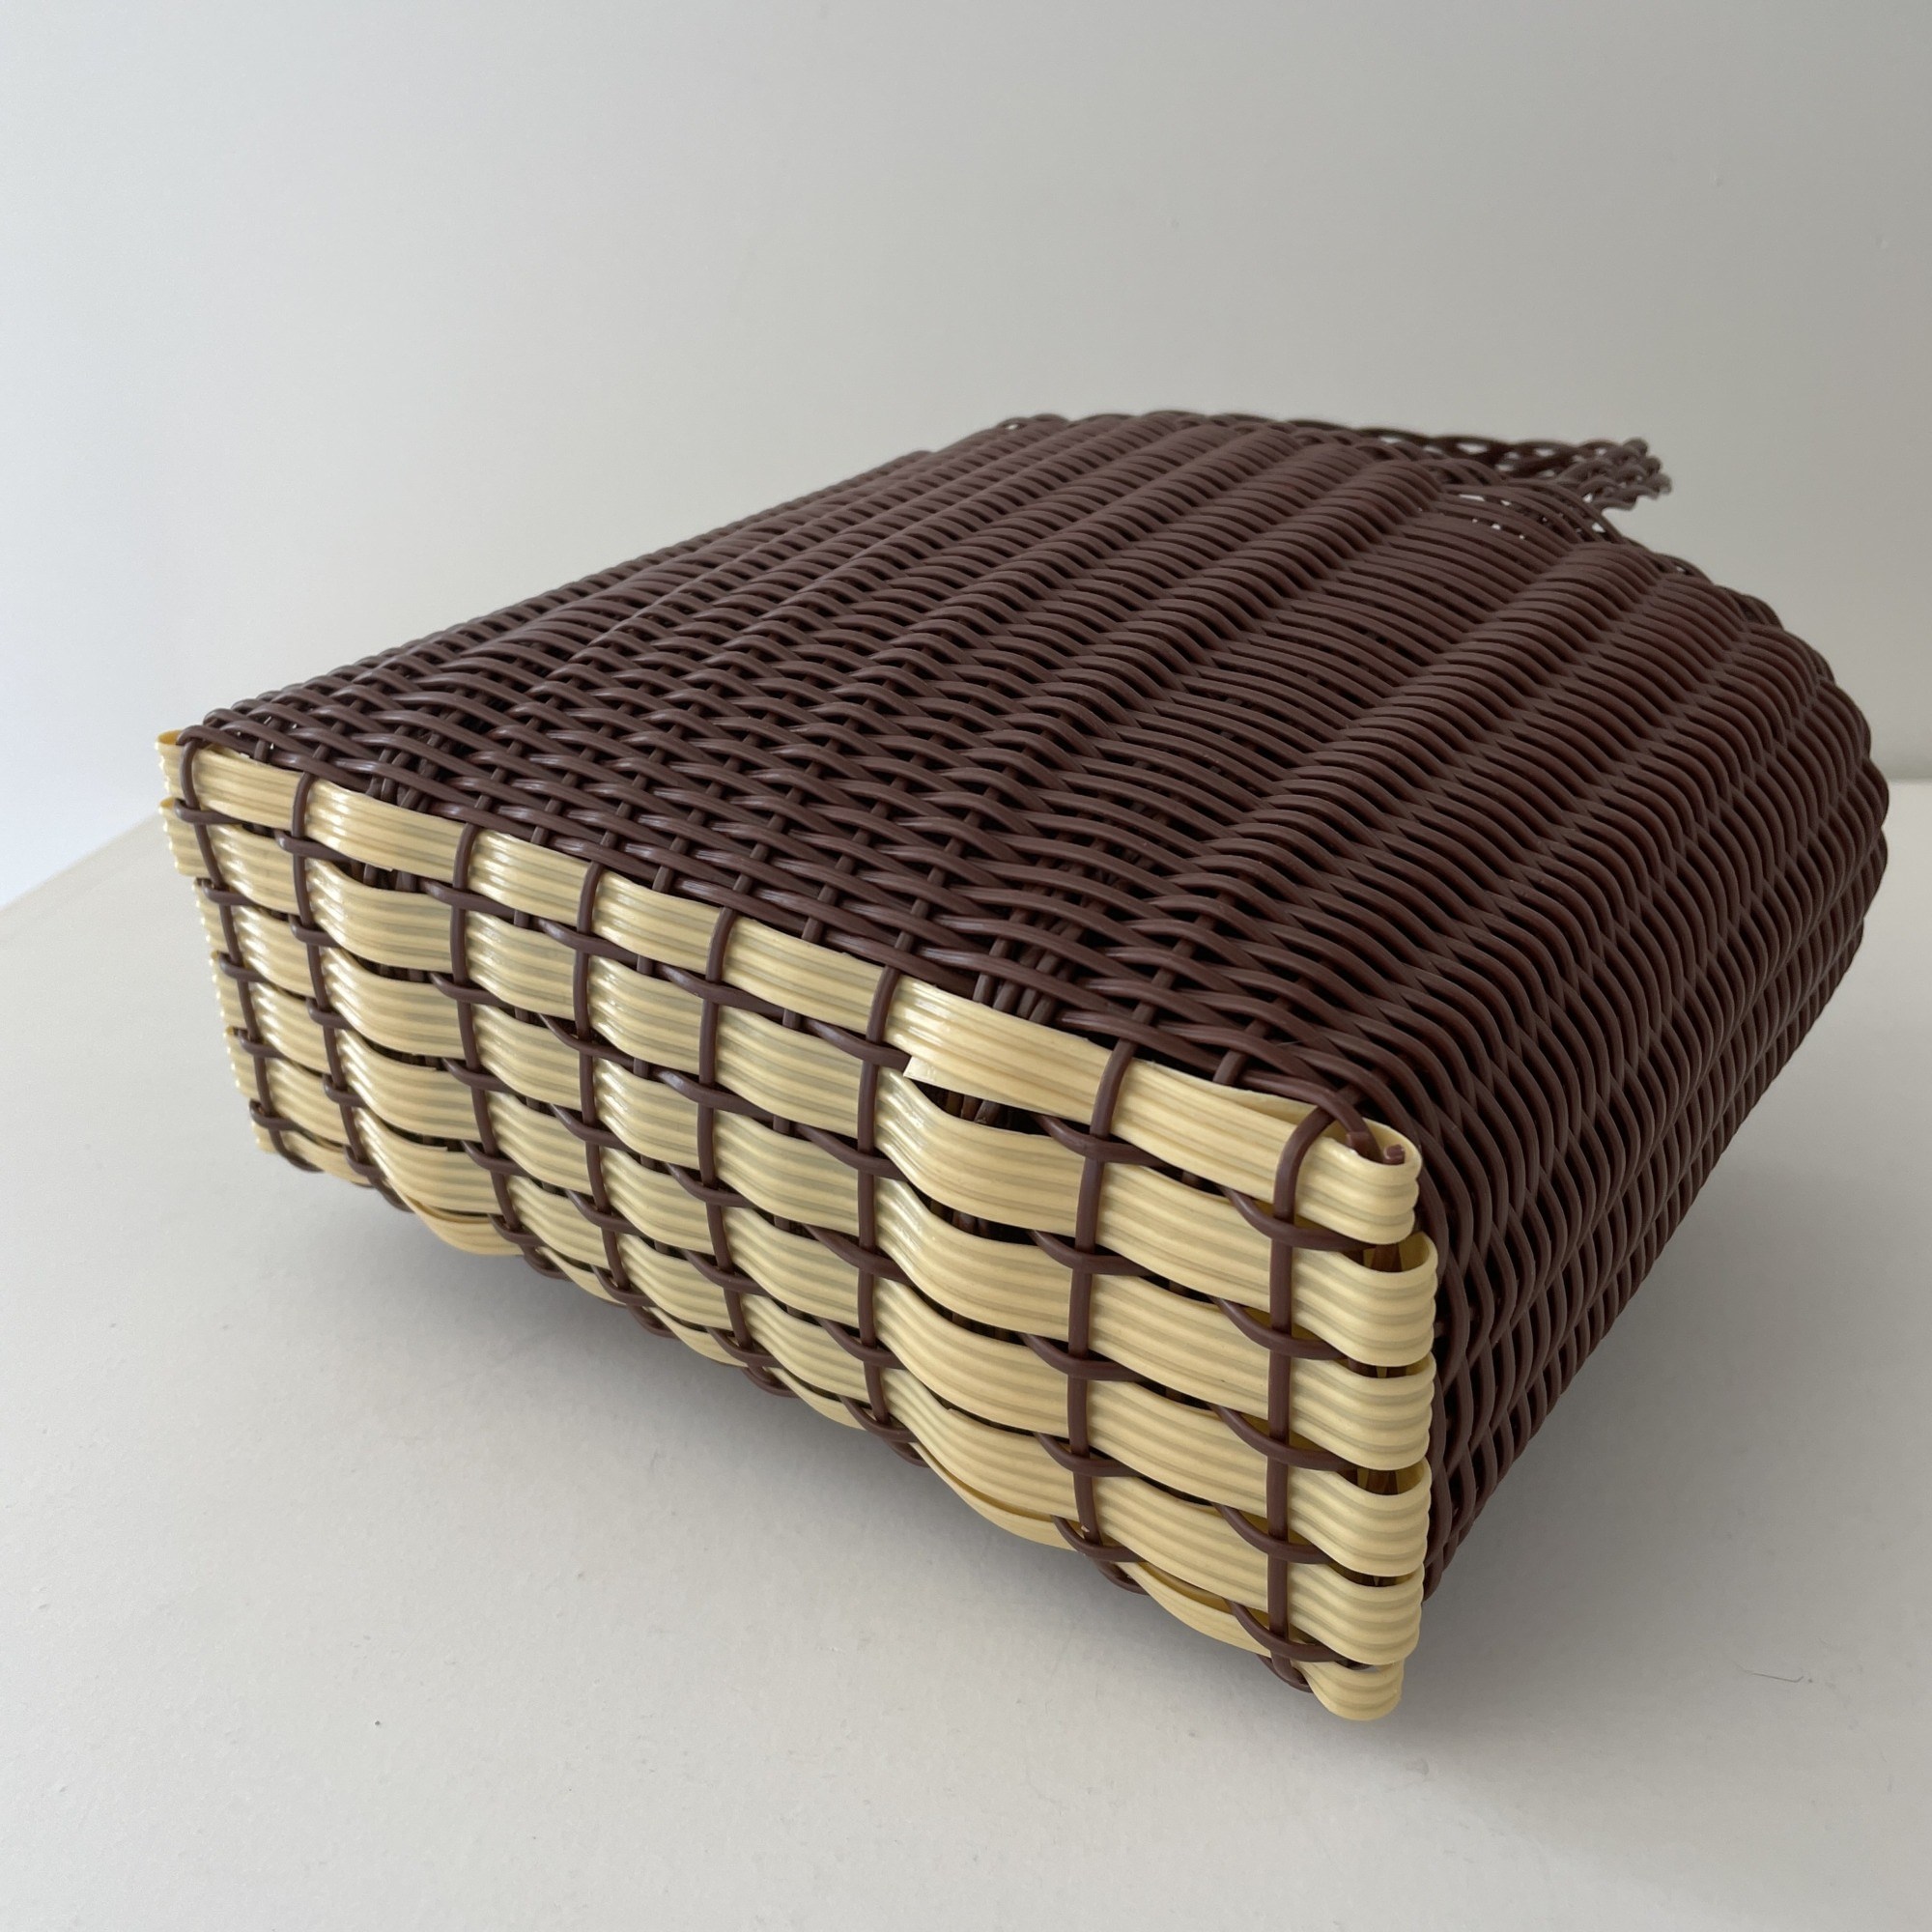 OthersPALOROSA Mini Tote Basket / Chocolate